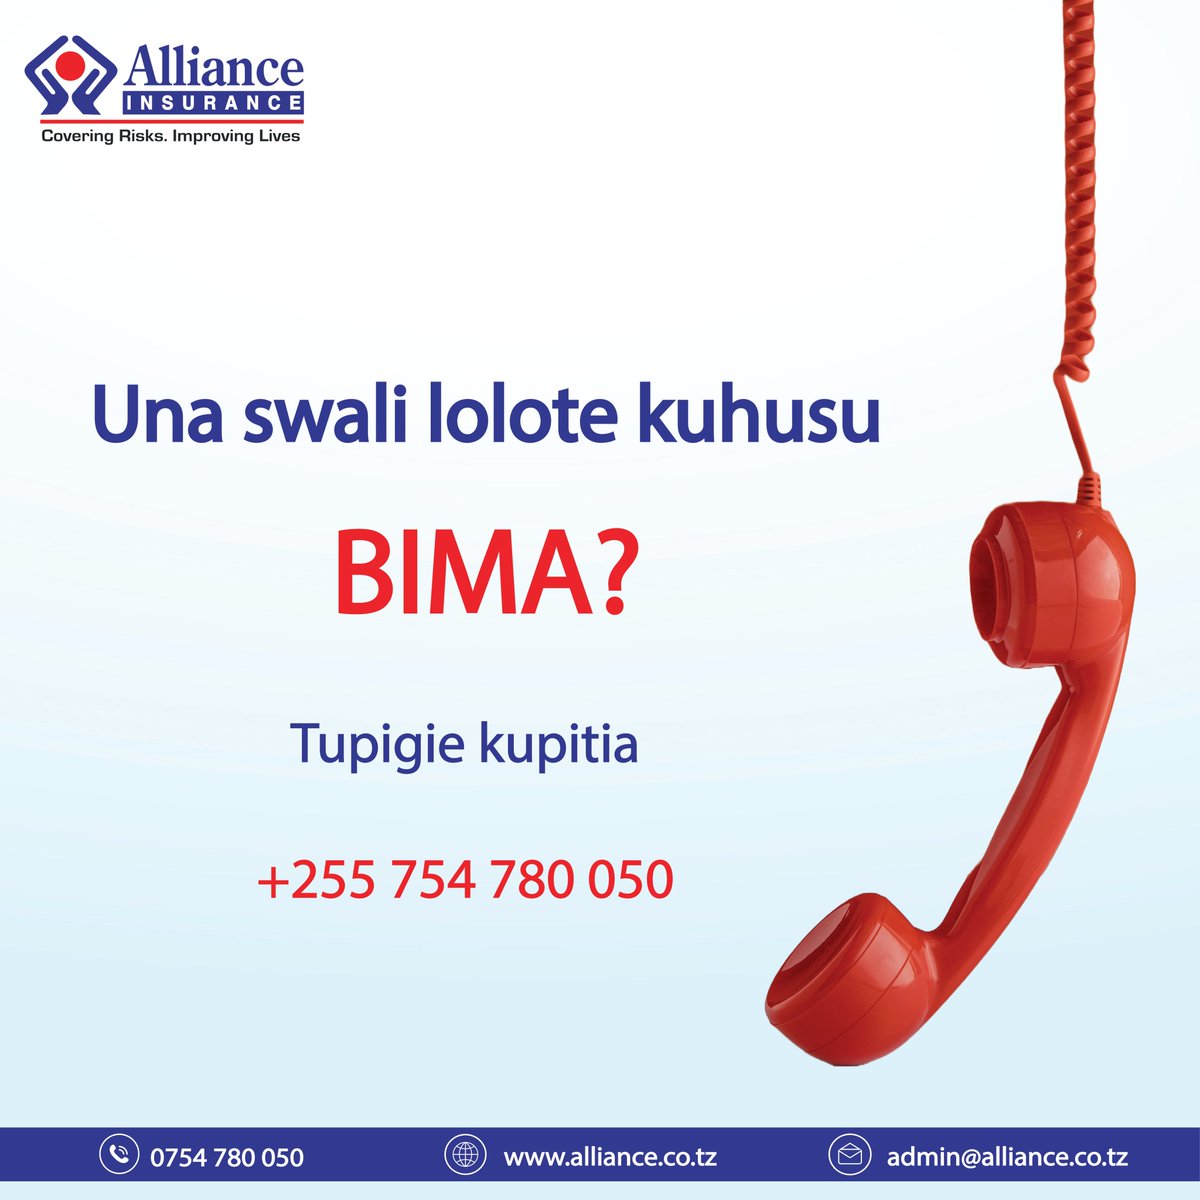 #allianceinsurance #alliance #insurenow #protection #insured #tanzania #daressalaam #insuranceindaressalaam #alliancebimachapchap #alliancemobileapp #onlineinsurance